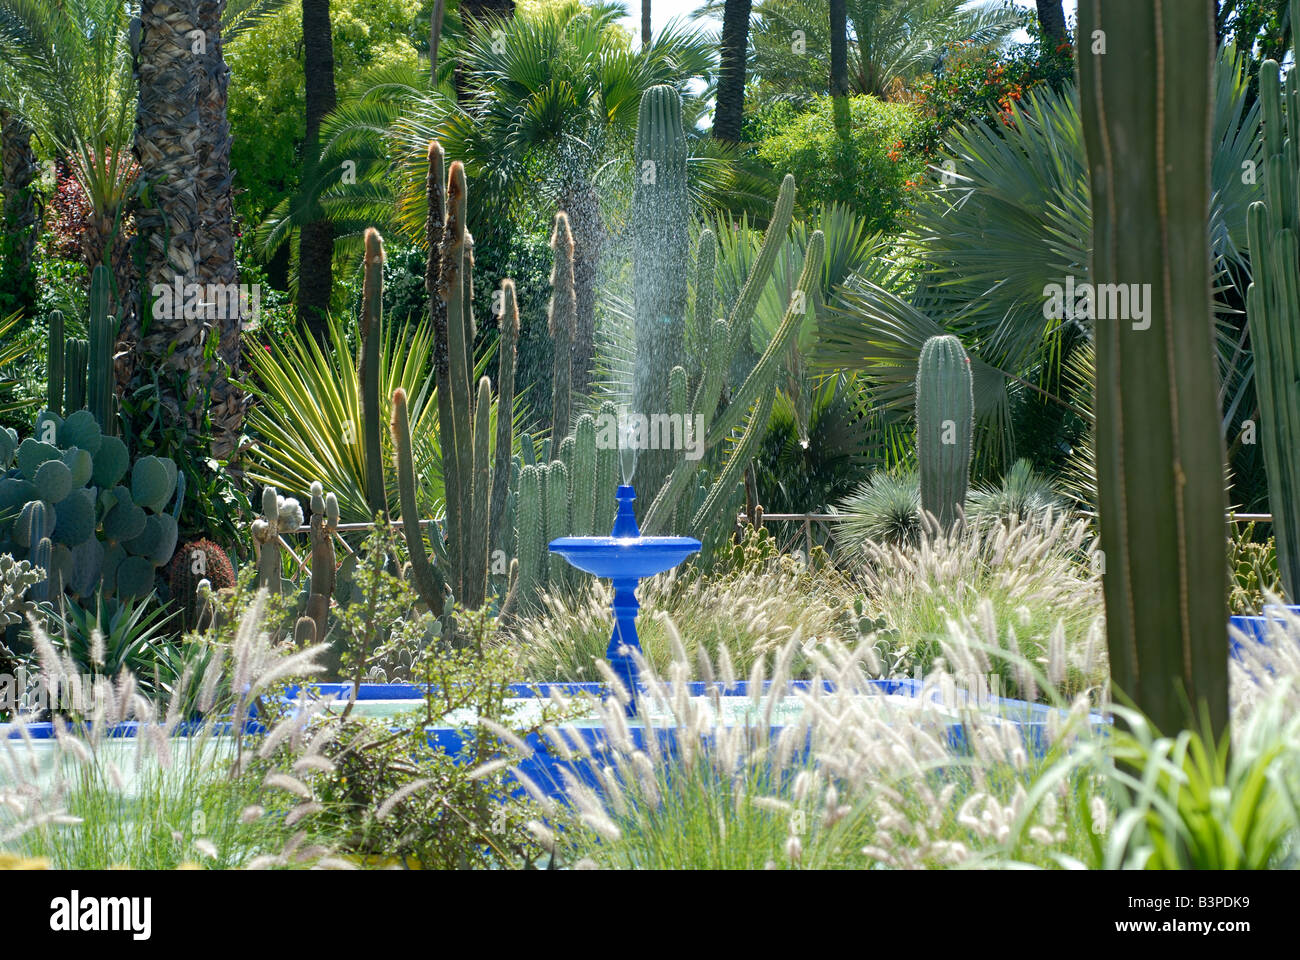 Jardin Majorelle Marrakech Giardini di Majorelle Marrakech giardini botanici di piante esotiche verde blu travel holiday fontana acqua Foto Stock